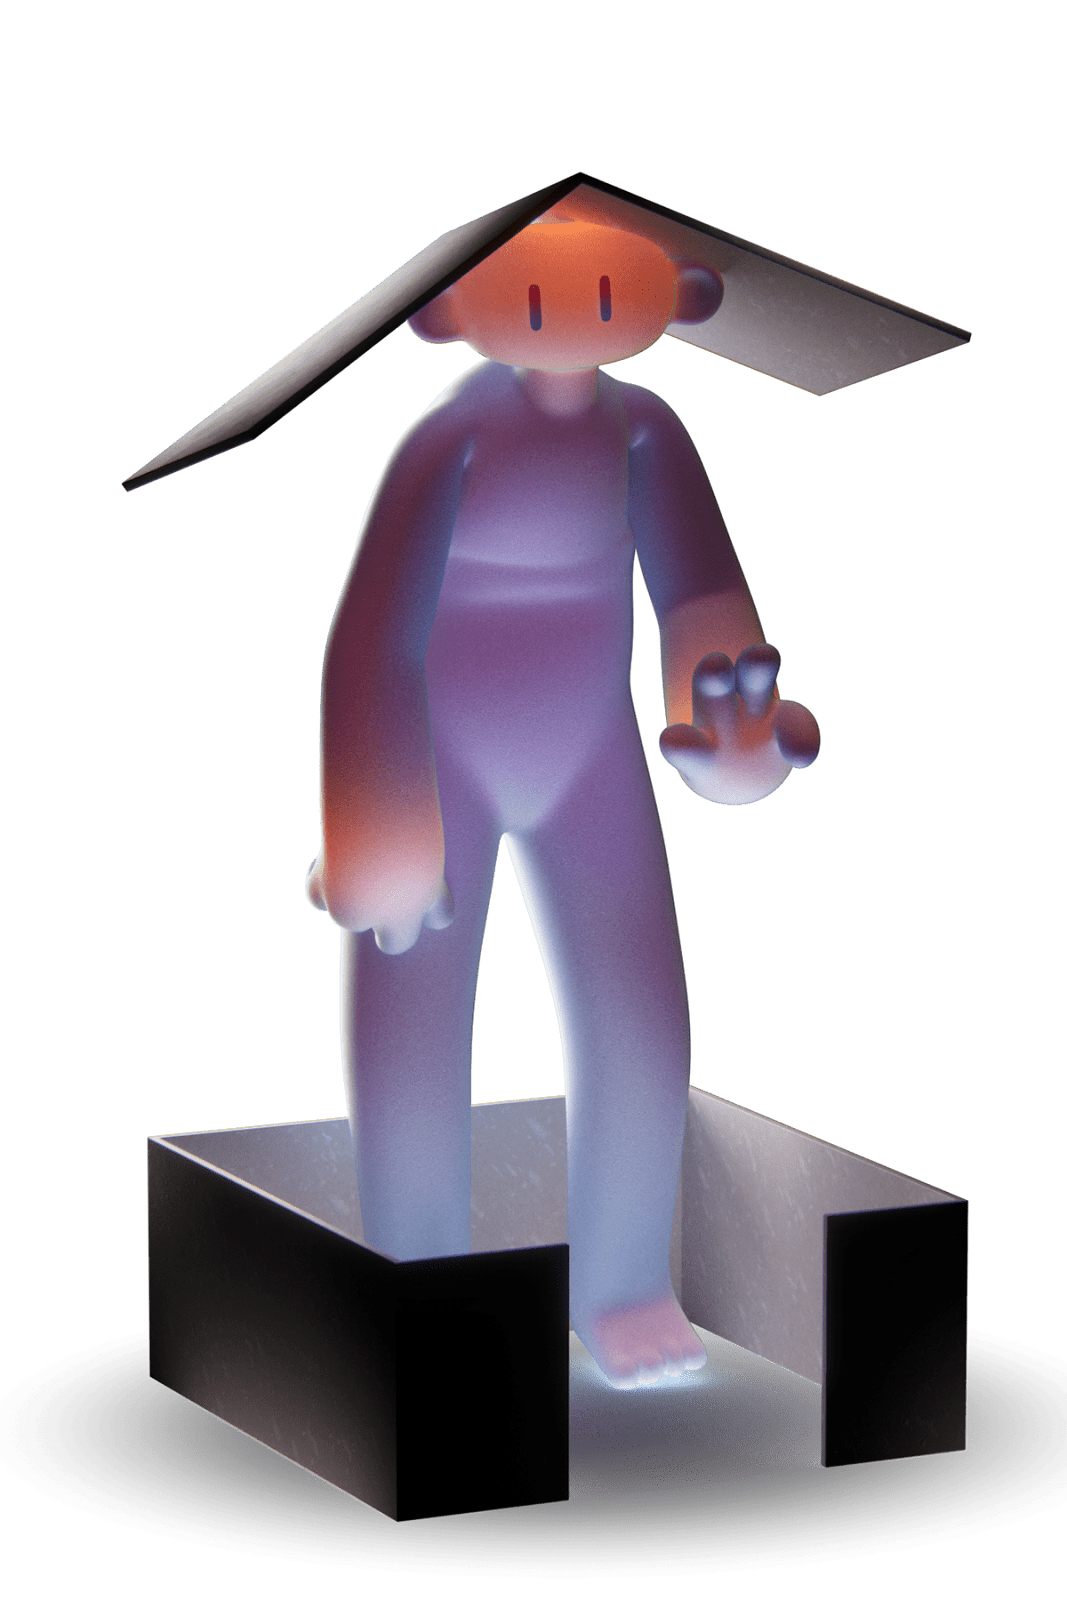 Character Design Illustration of Translucent Man